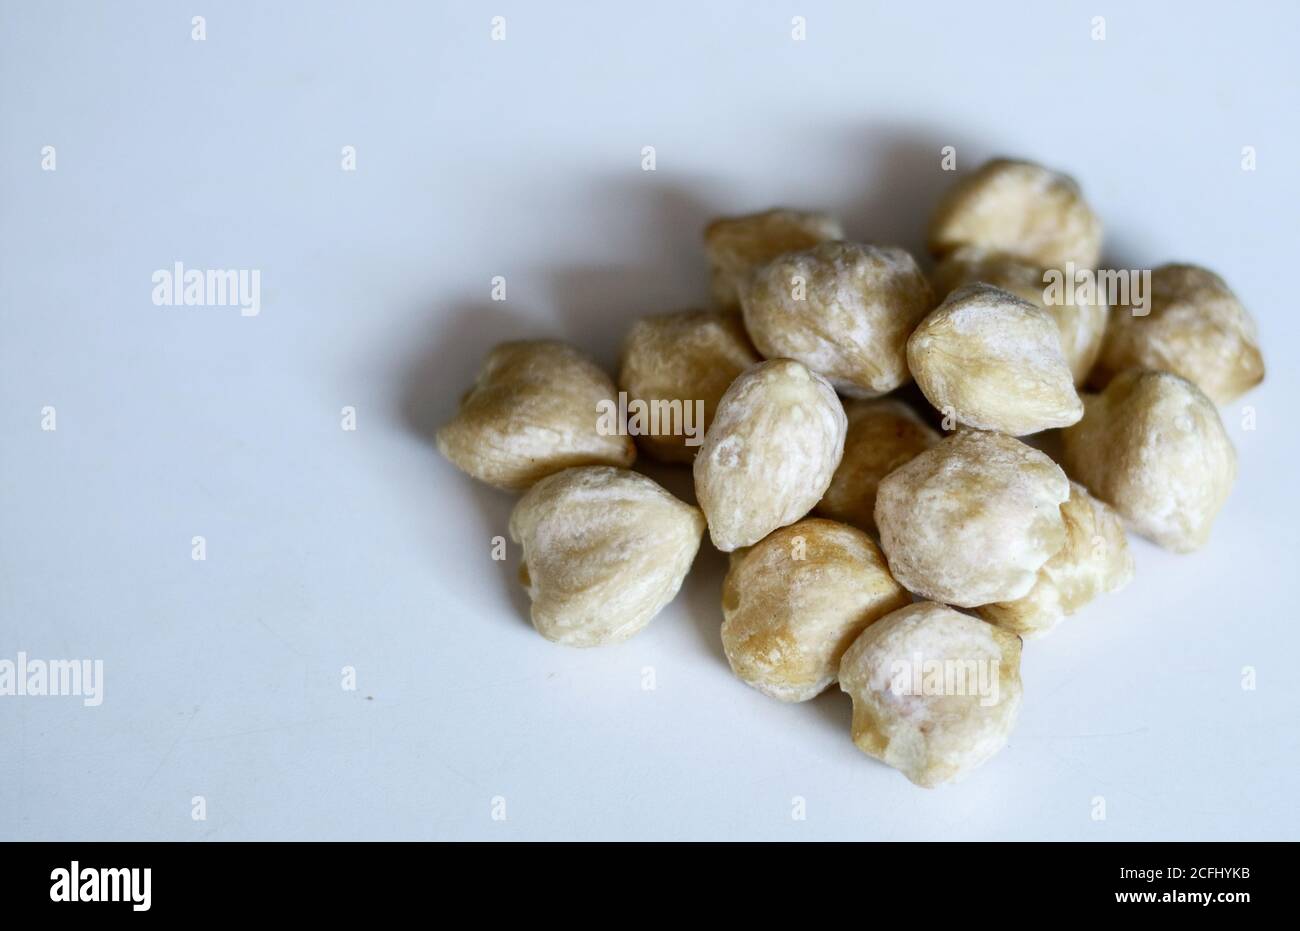 Candlenut or aleurites moluccana on white background. Stock Photo